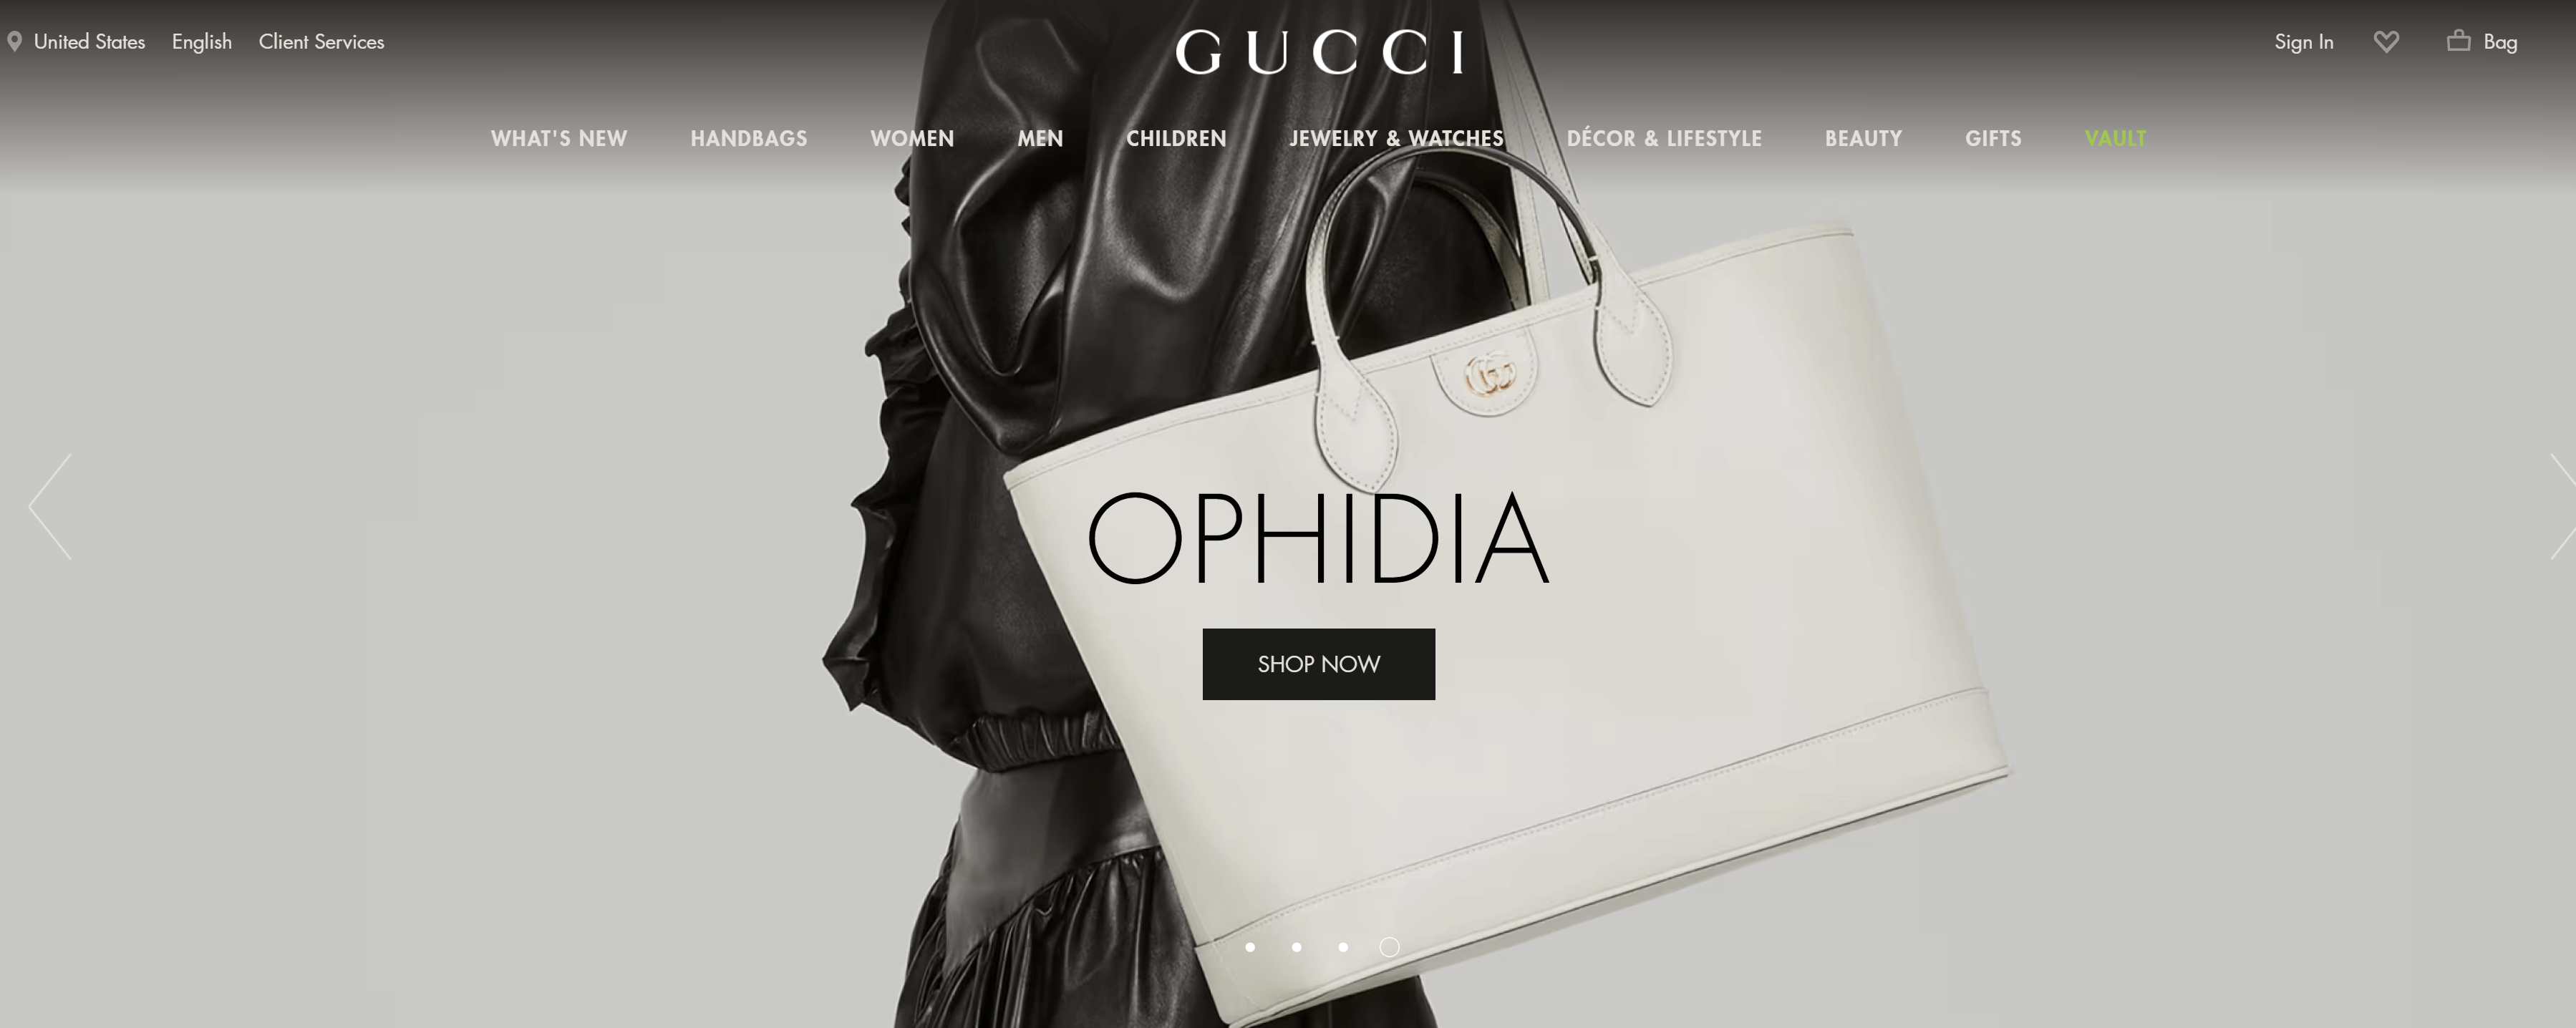 Gucci website design